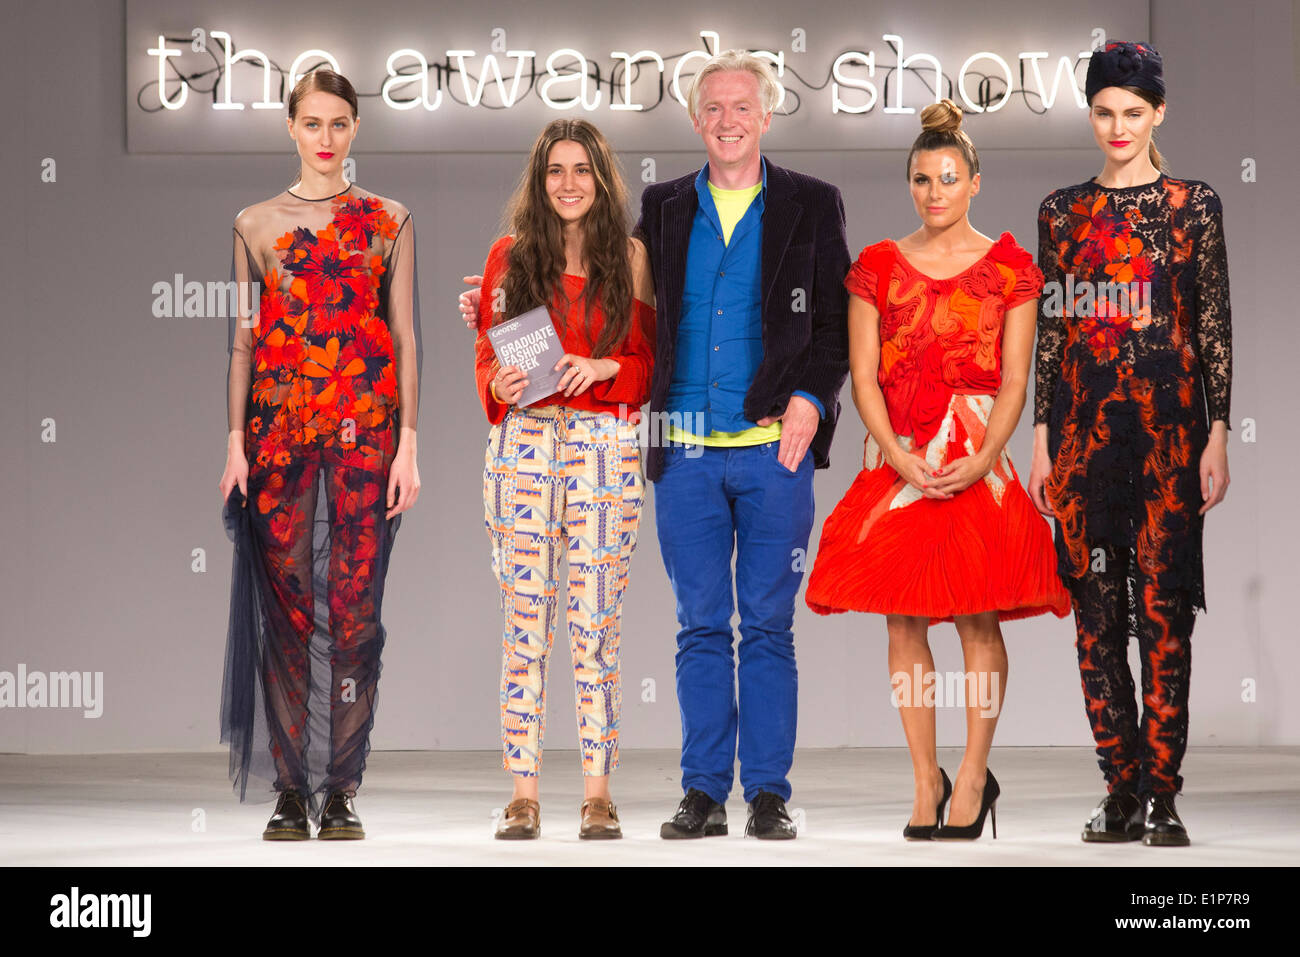 Grace Weller receives the Womenswear Award from Philip Treacy, with Zoe Hardman, Graduate Fashion Week 2014 Awards Show. Stock Photo